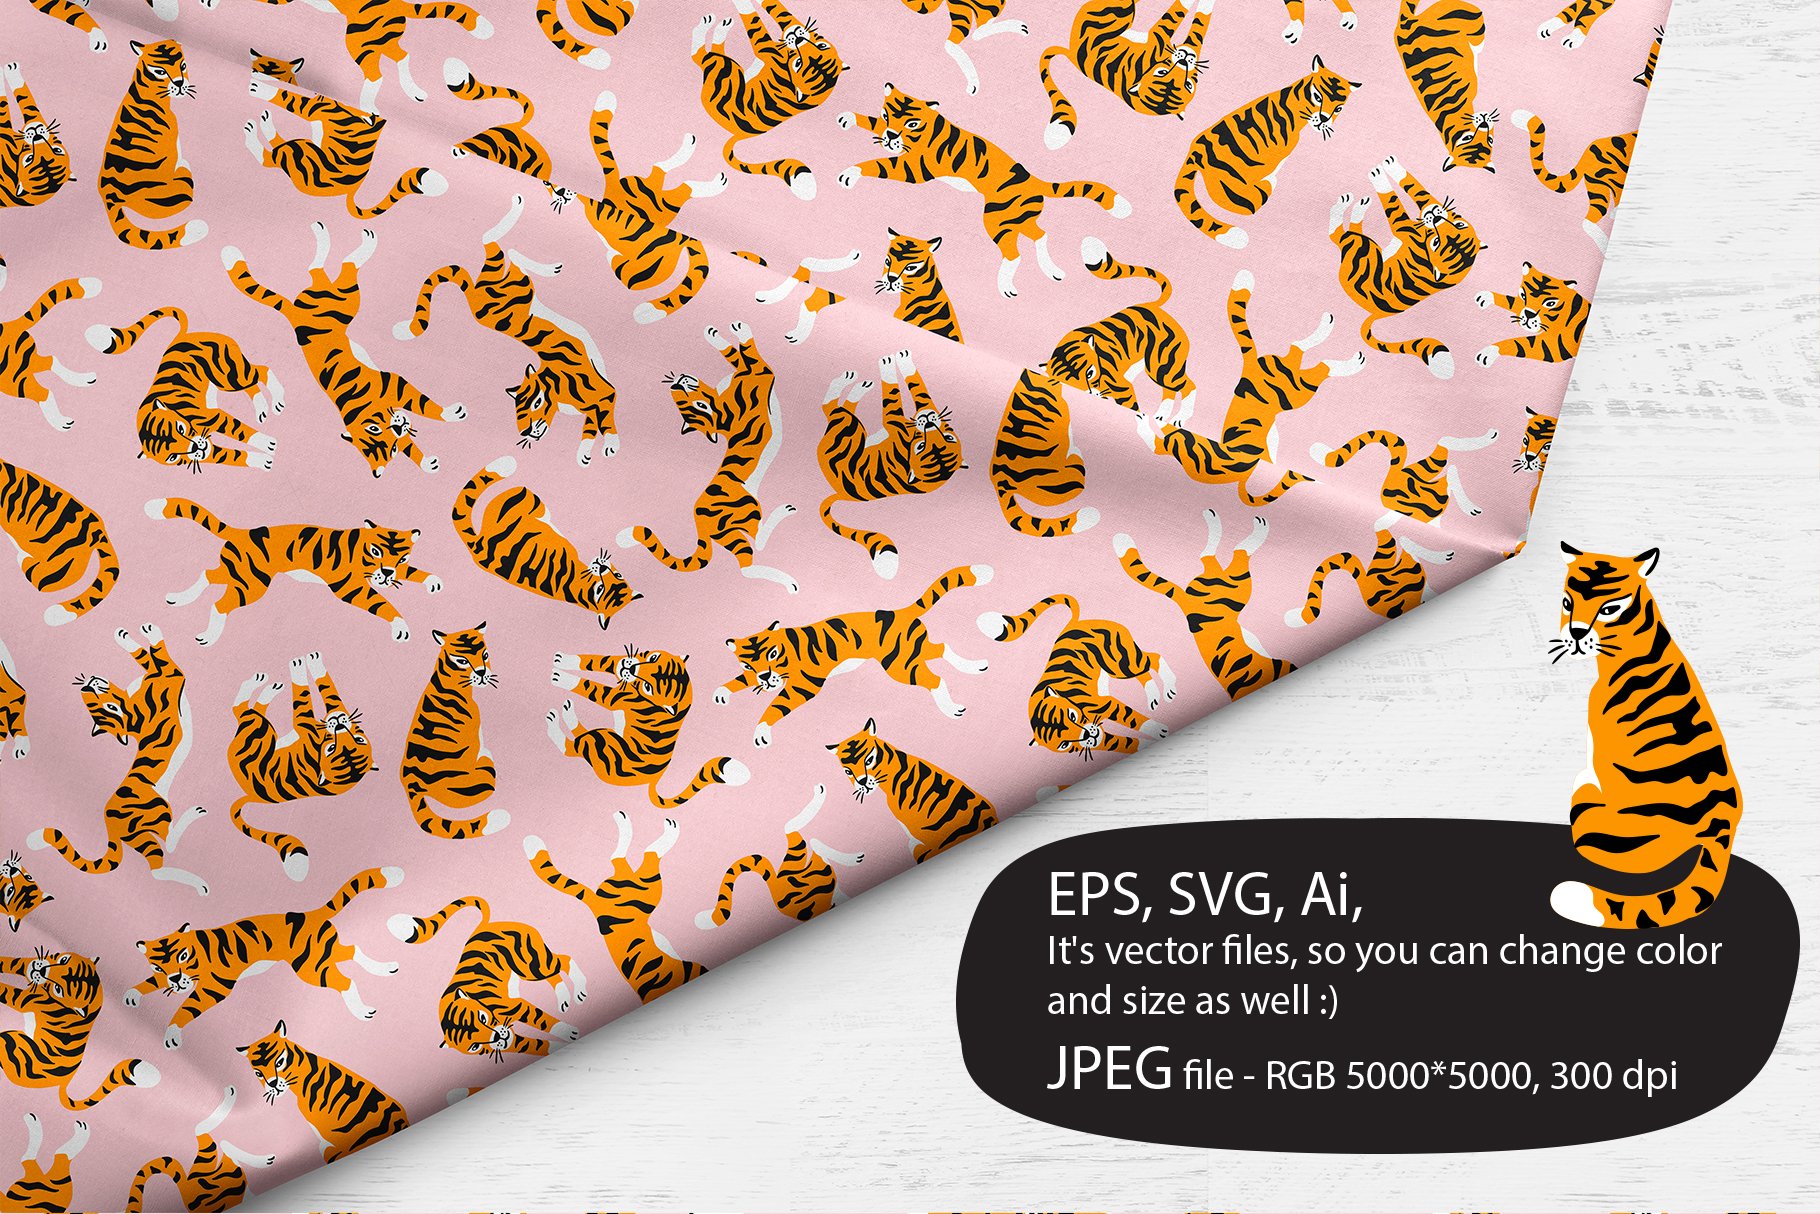 Cute Tigers on Pink Seamless Pattern.